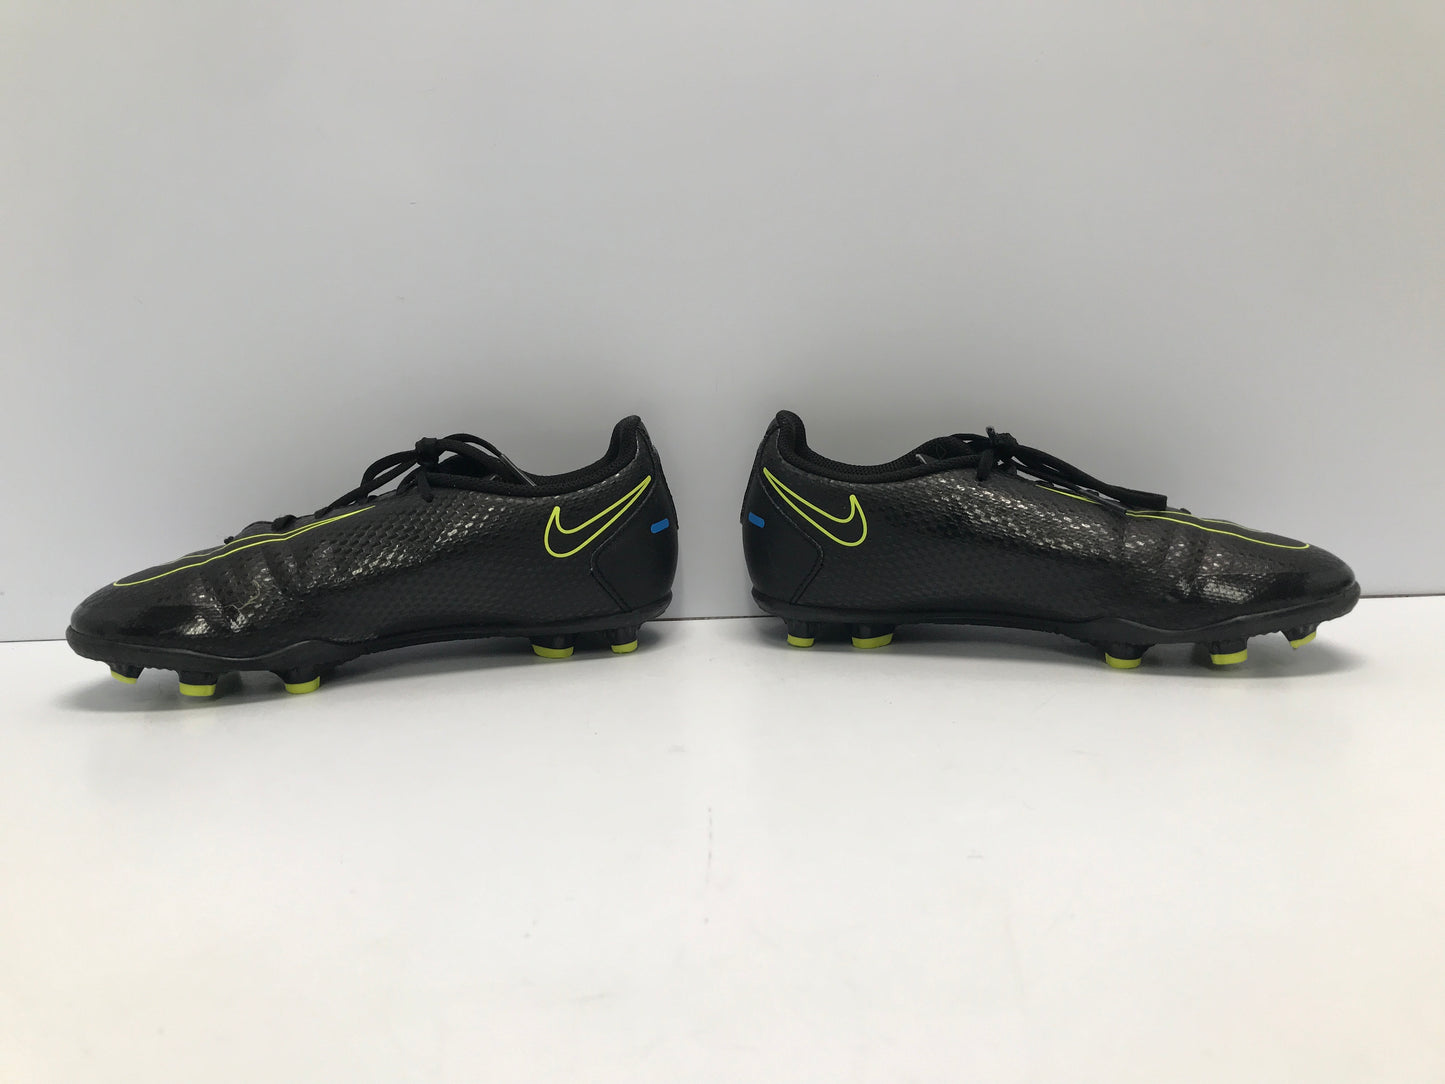 Soccer Shoes Cleats Child Size 2 Nike Phantom Black Lime Like New